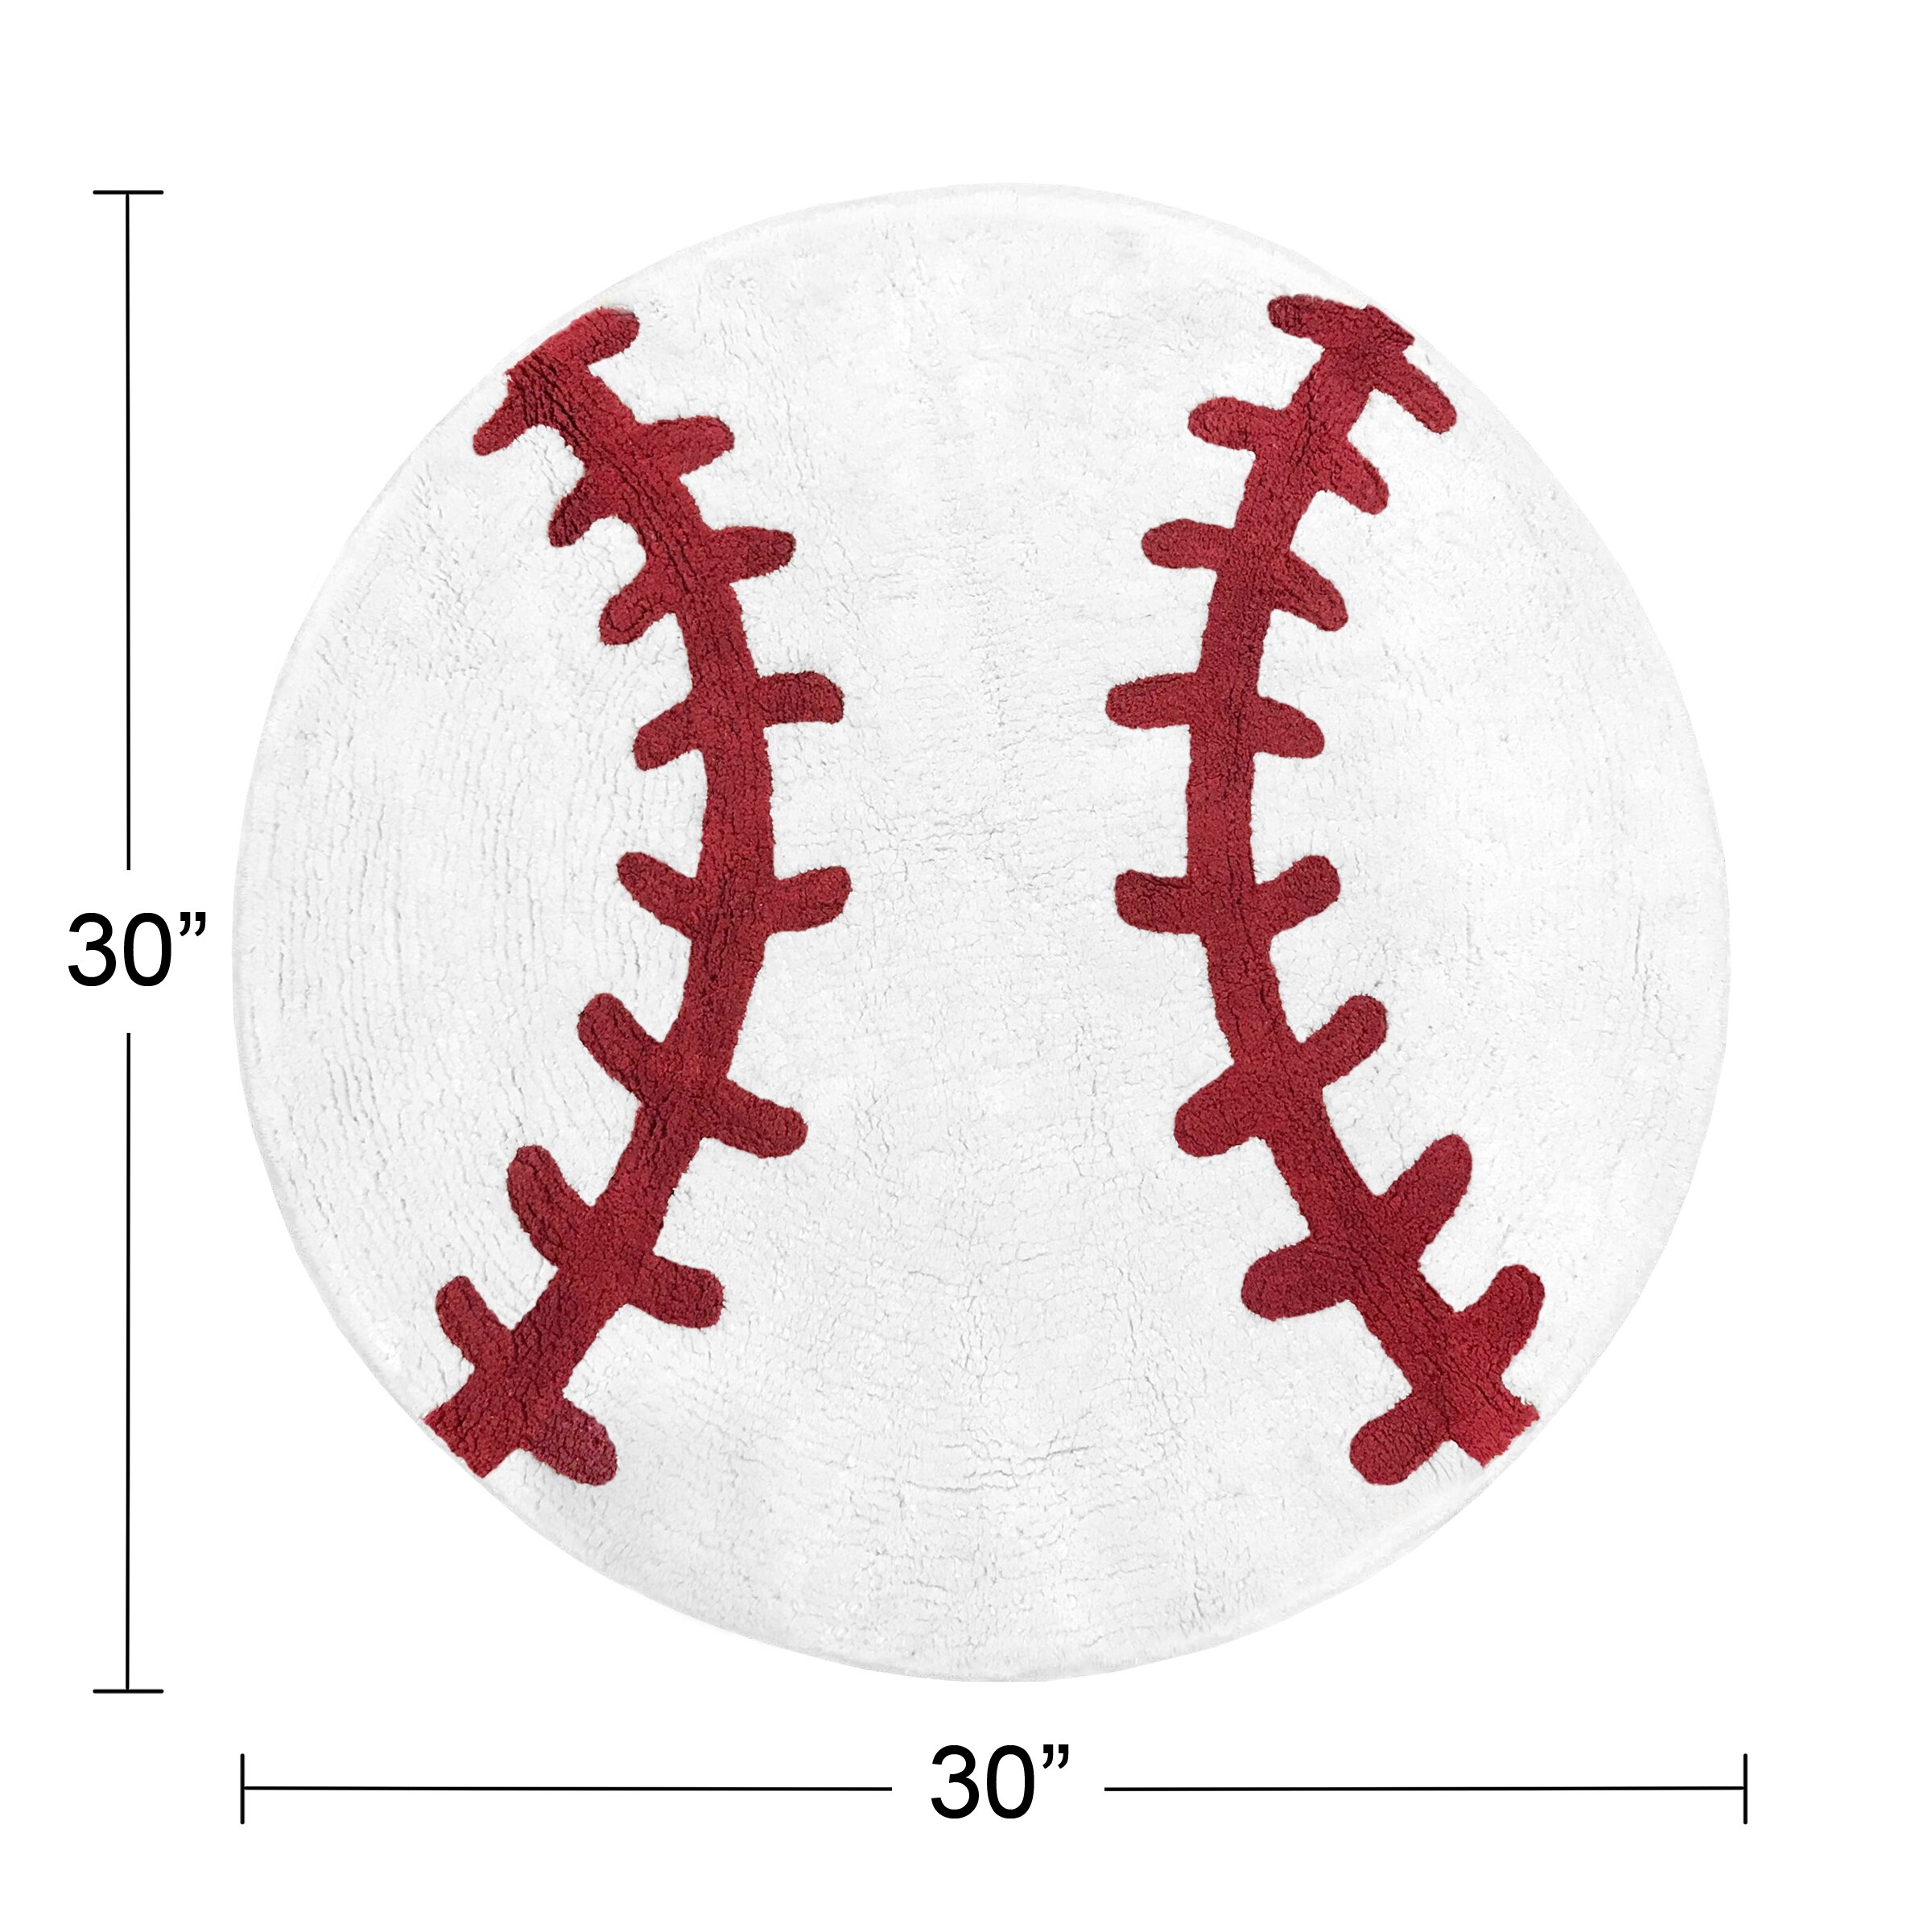  Baseball Area Rug 3x5 Sports Game Accent Rug Baseball